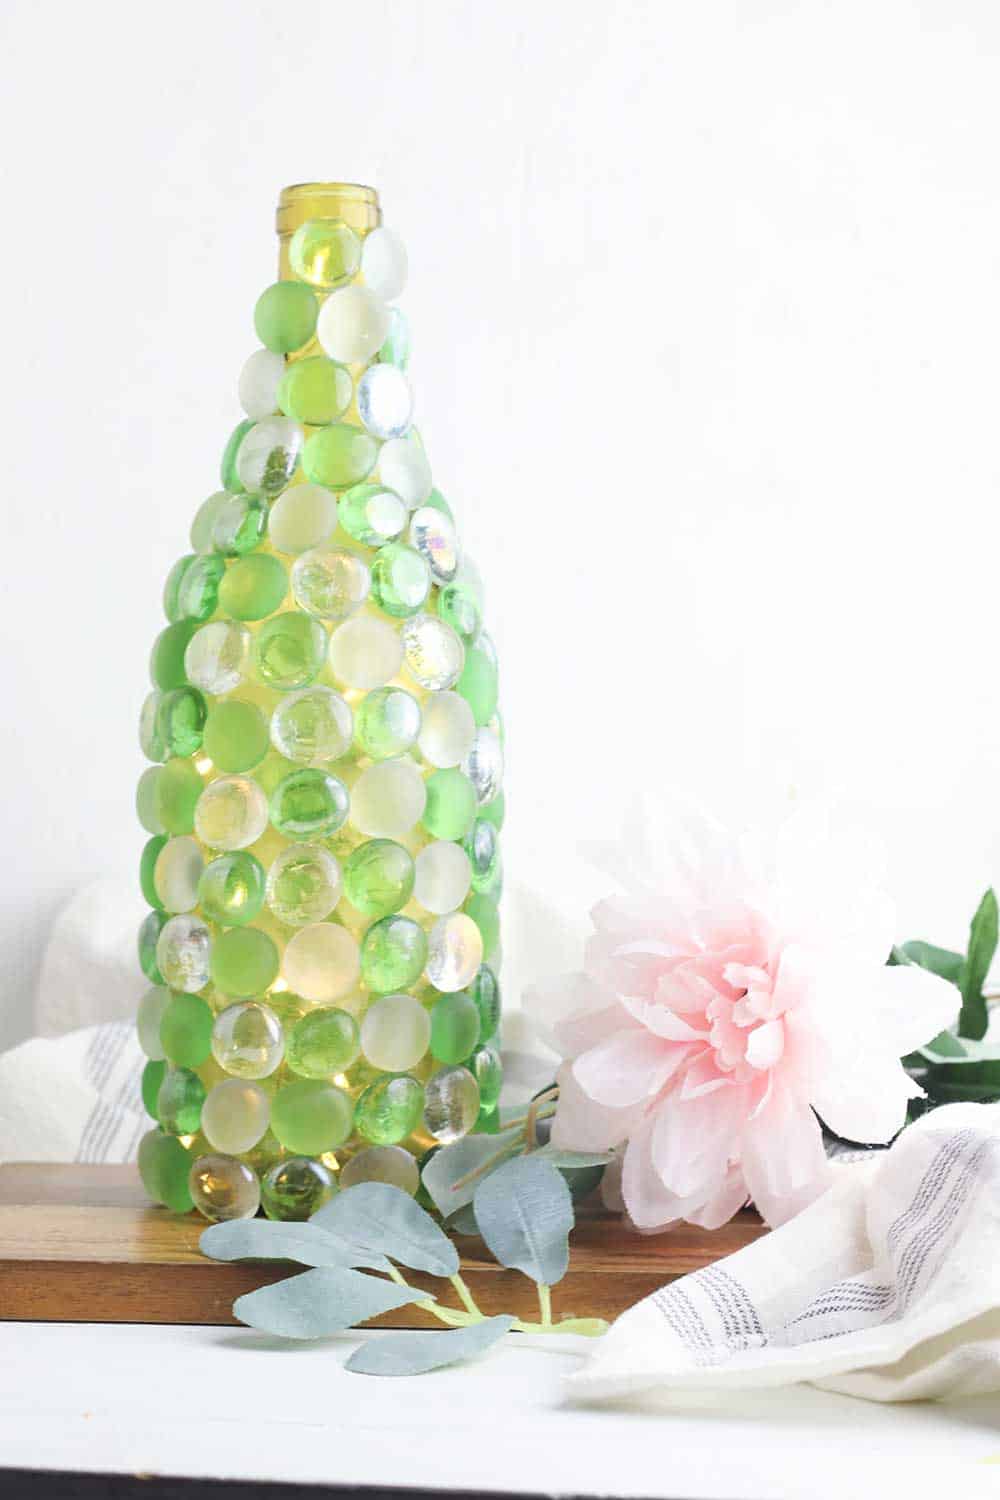 https://singlegirlsdiy.com/wp-content/uploads/2021/08/how-to-make-decorative-bottles.jpg